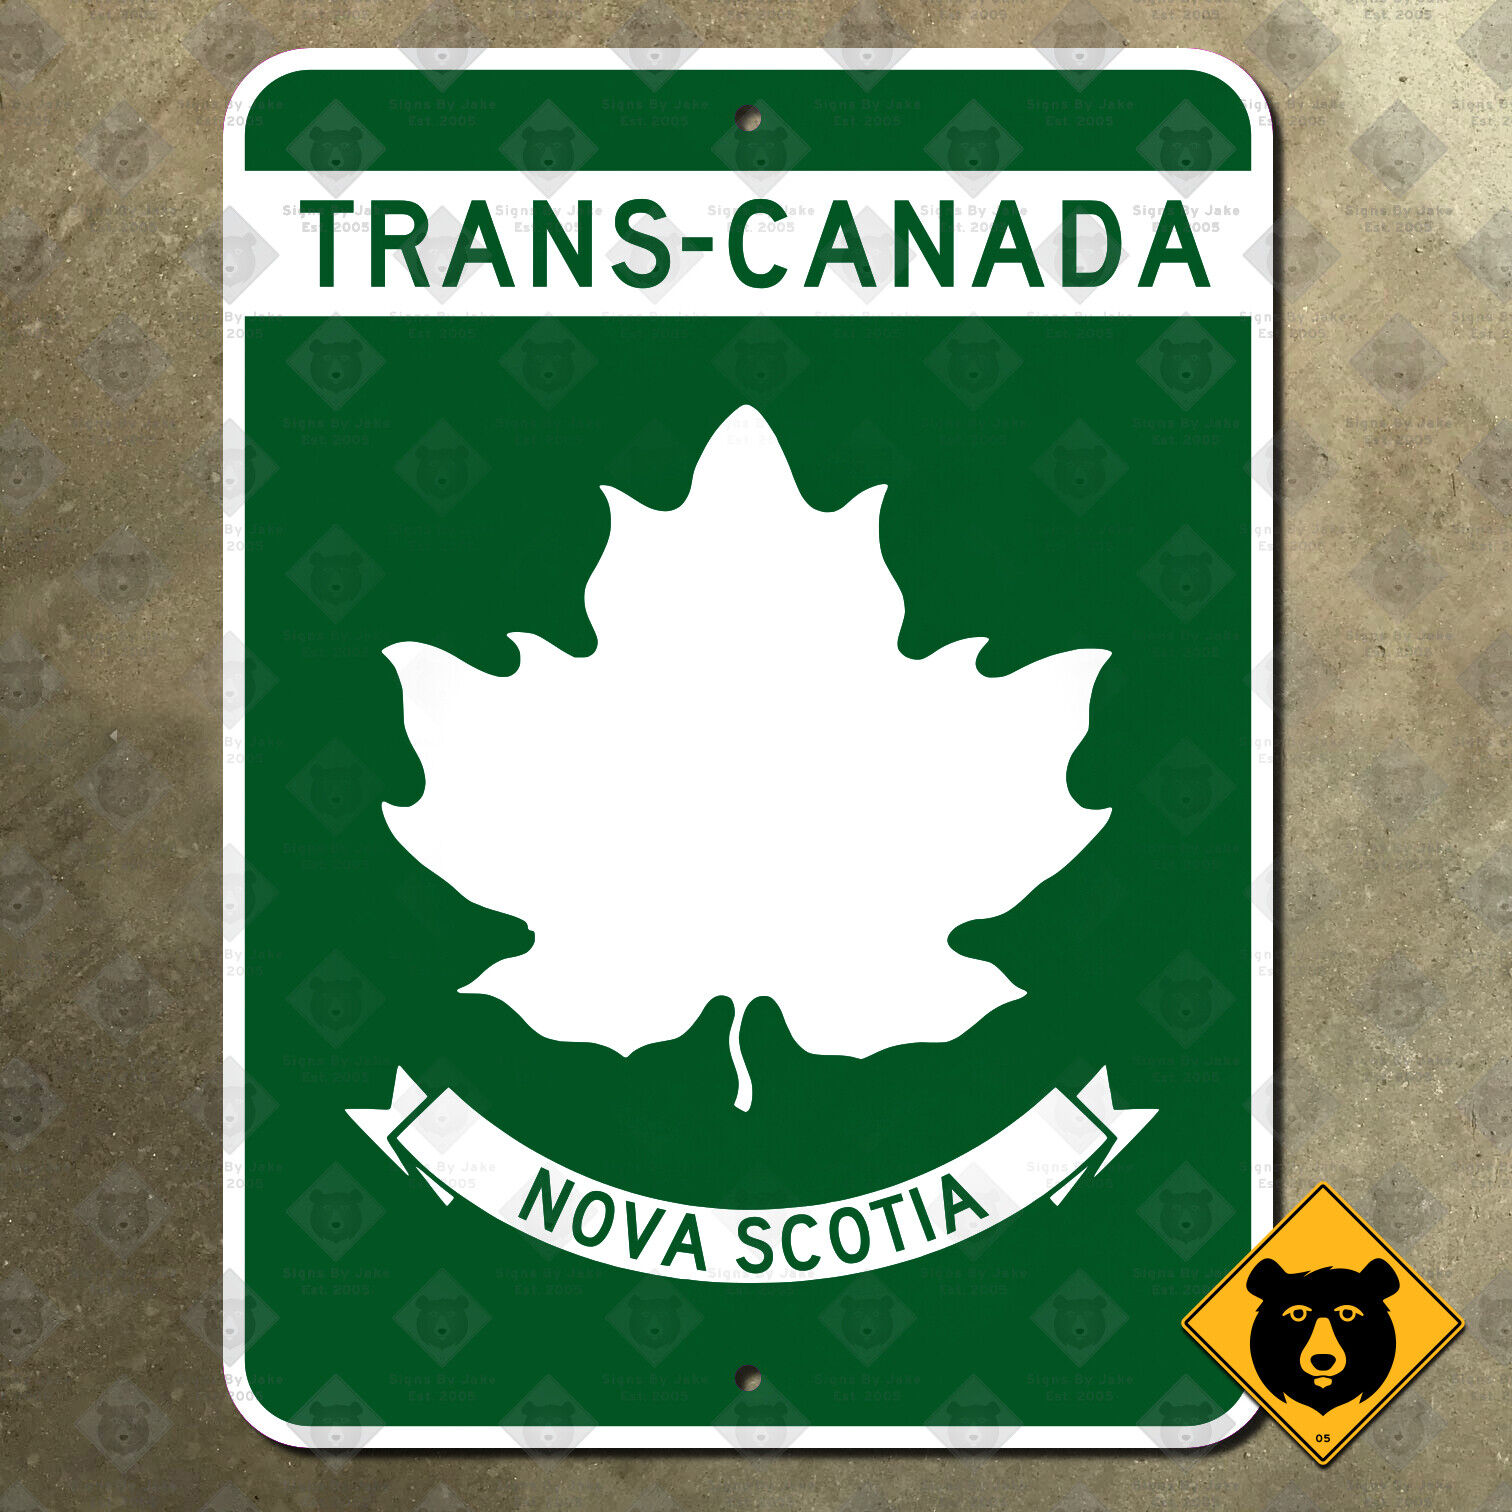 Canada Nova Scotia Amherst Trans-Canada Highway 104 105 route road sign 15x20